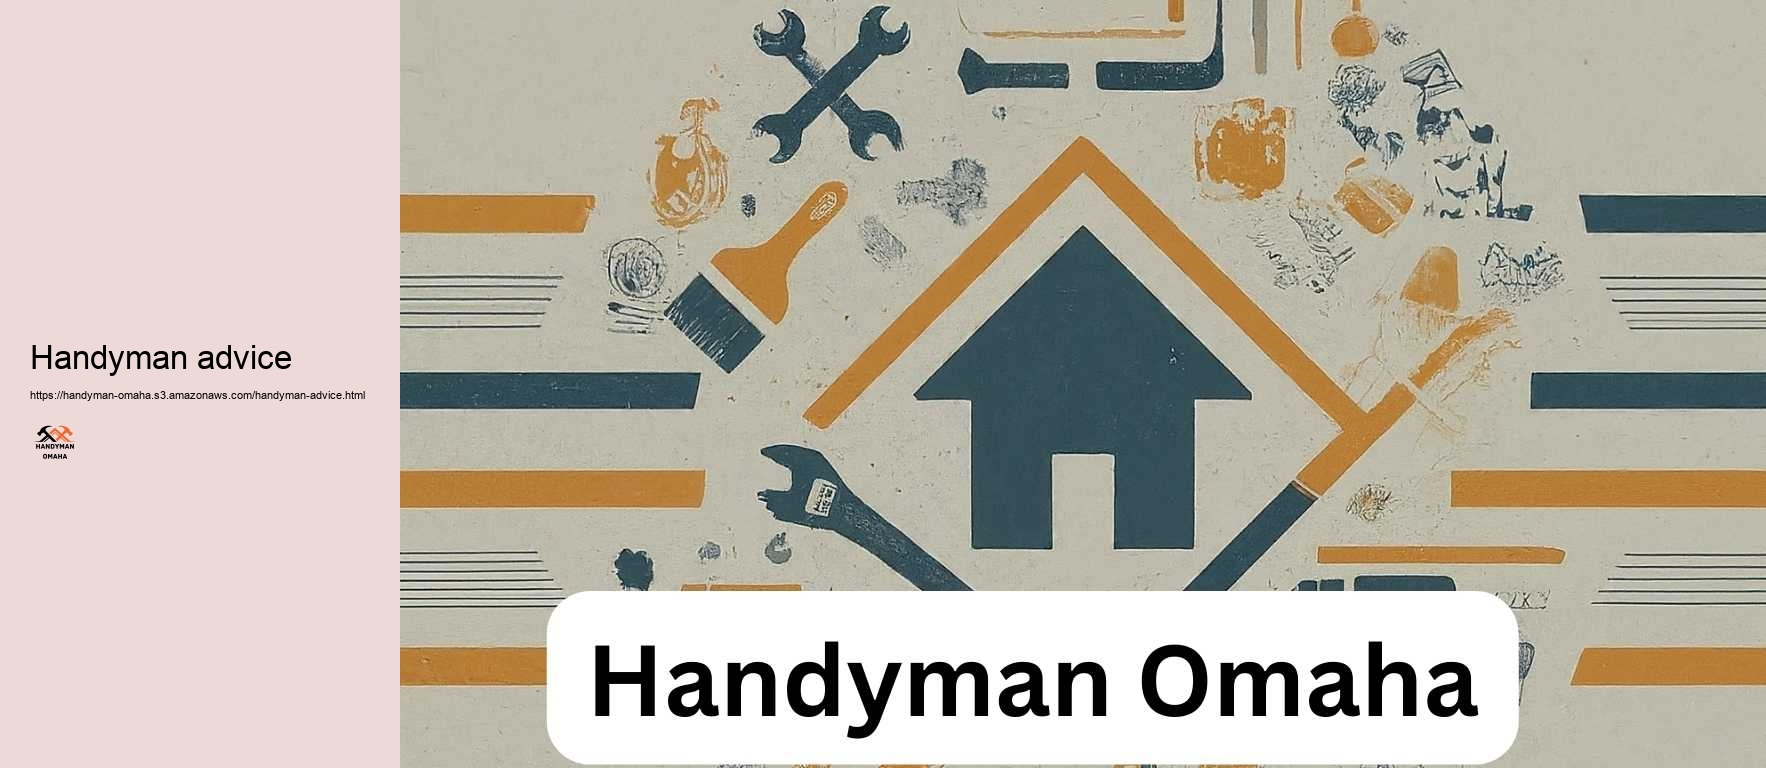 Handyman advice